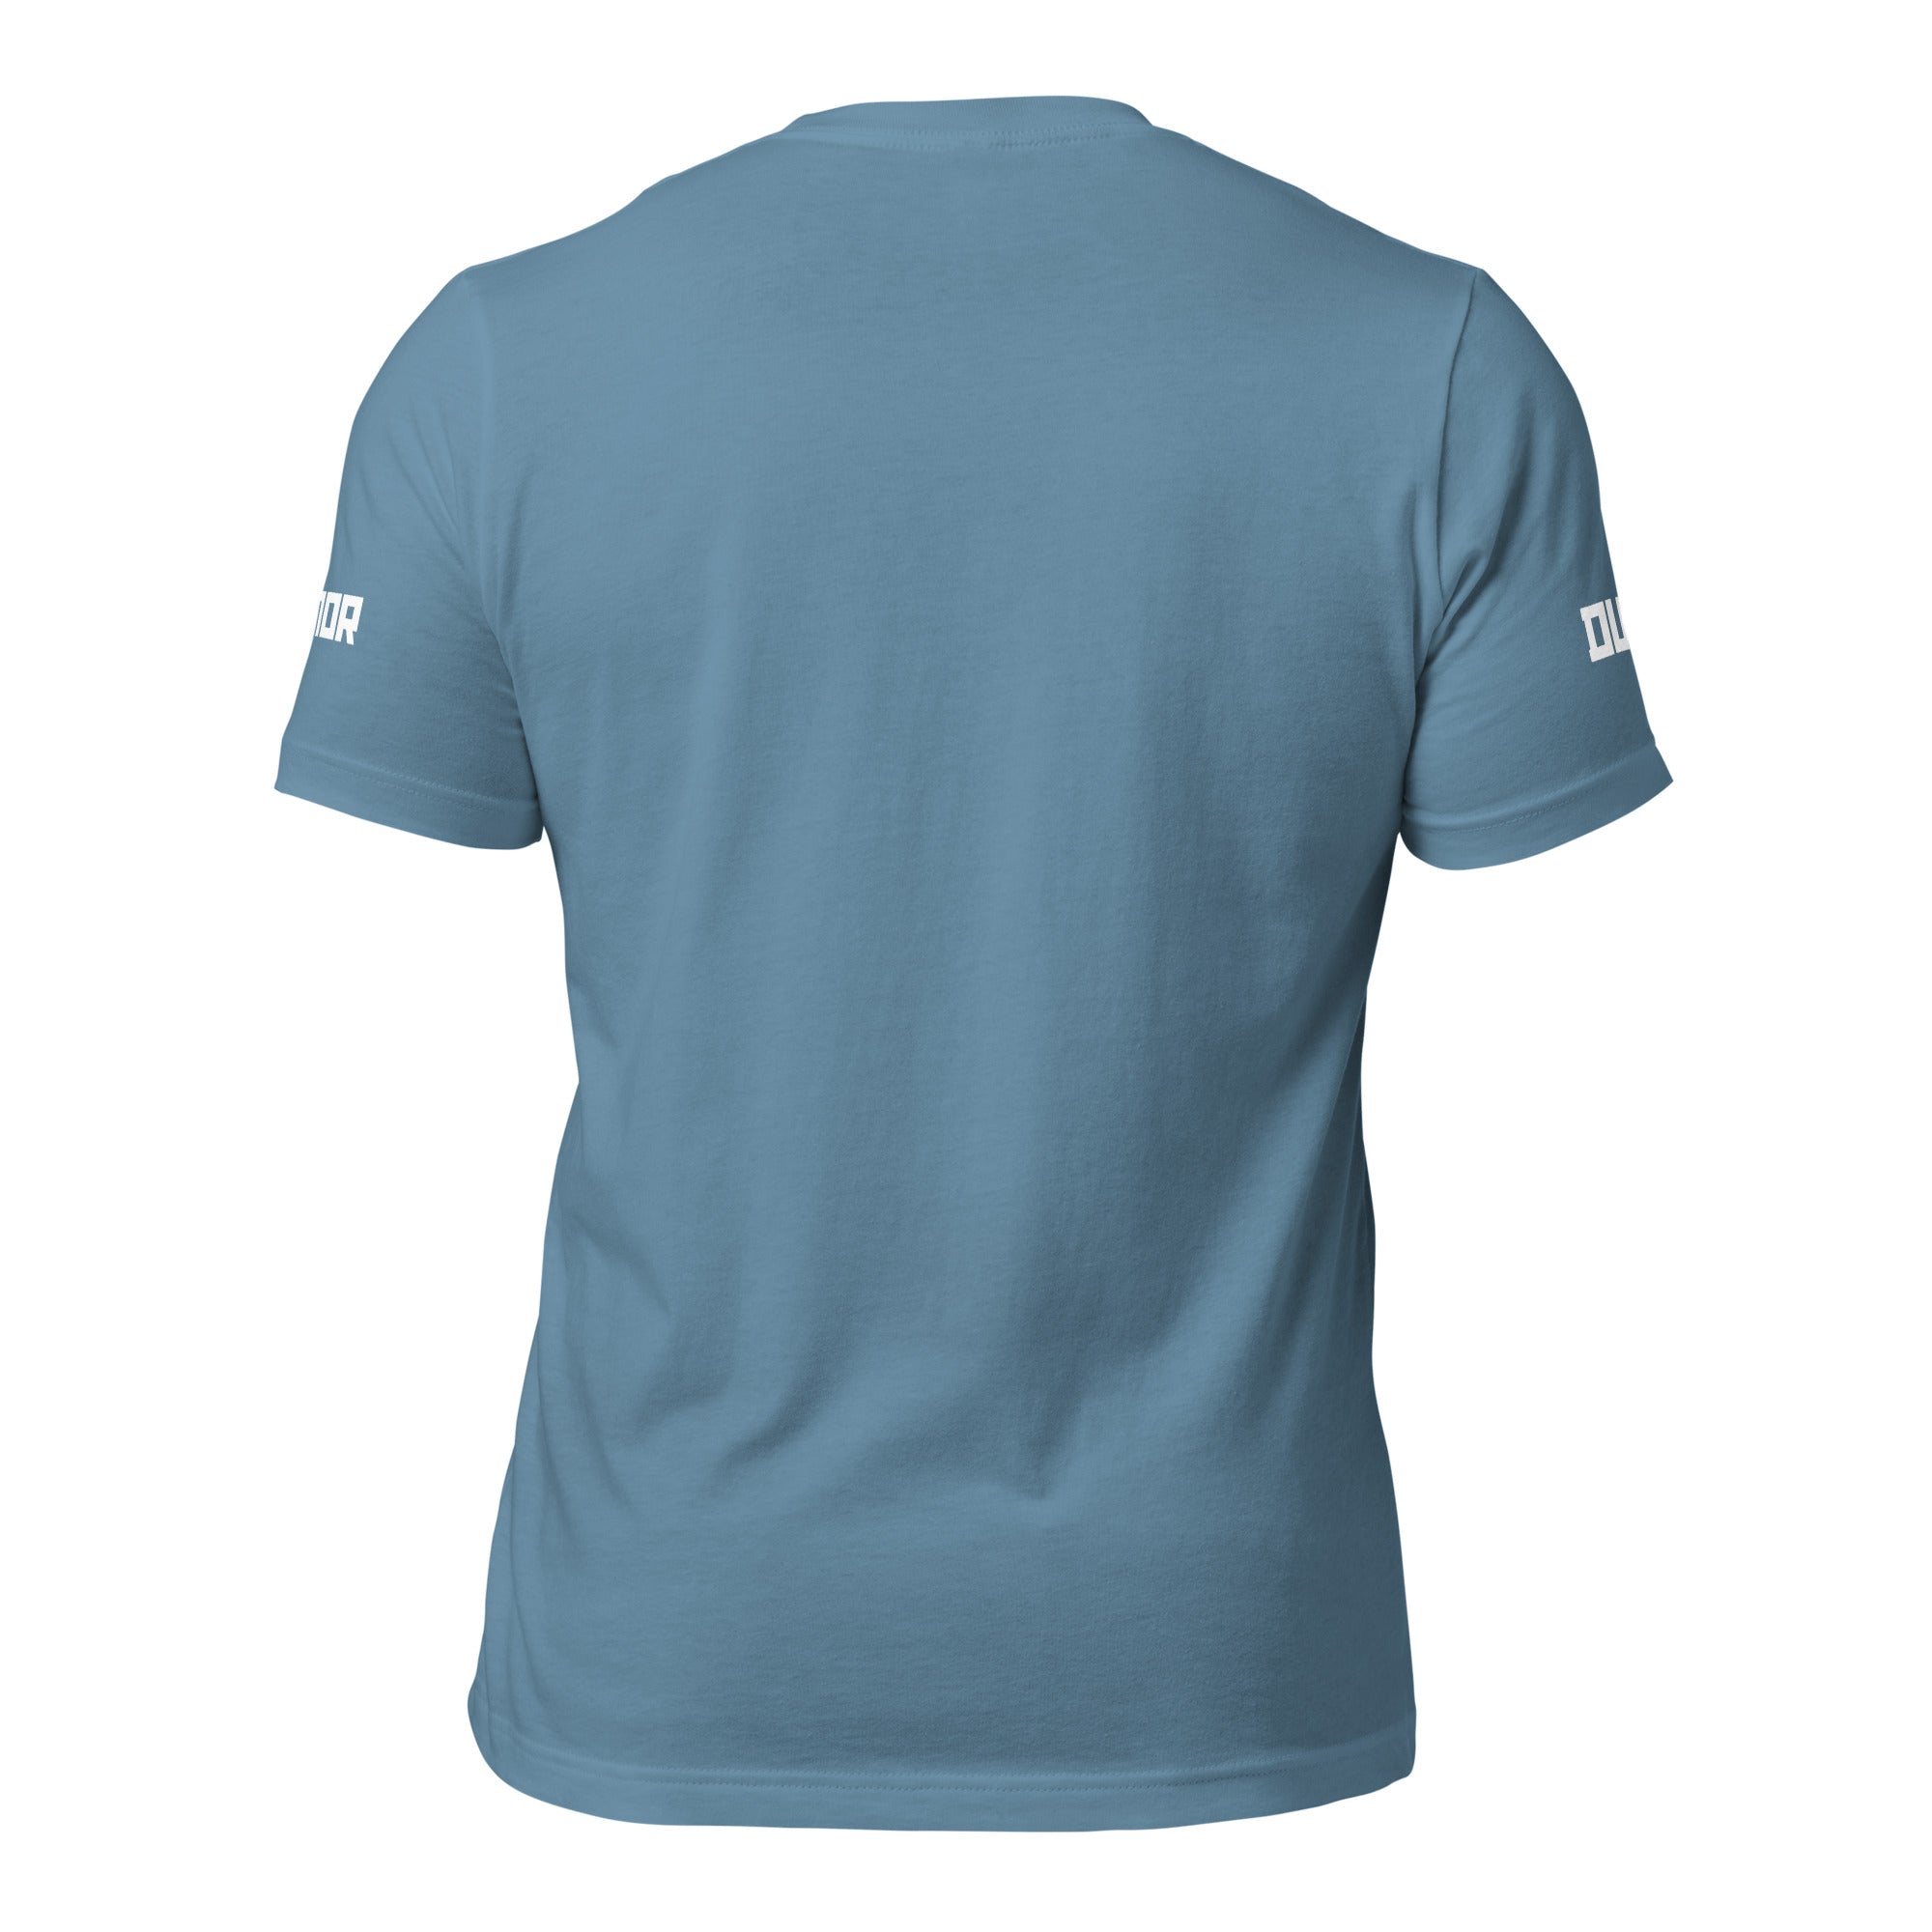 Unisex Crew Neck T-Shirt - America Duty Honor - GRAPHIC T-SHIRTS